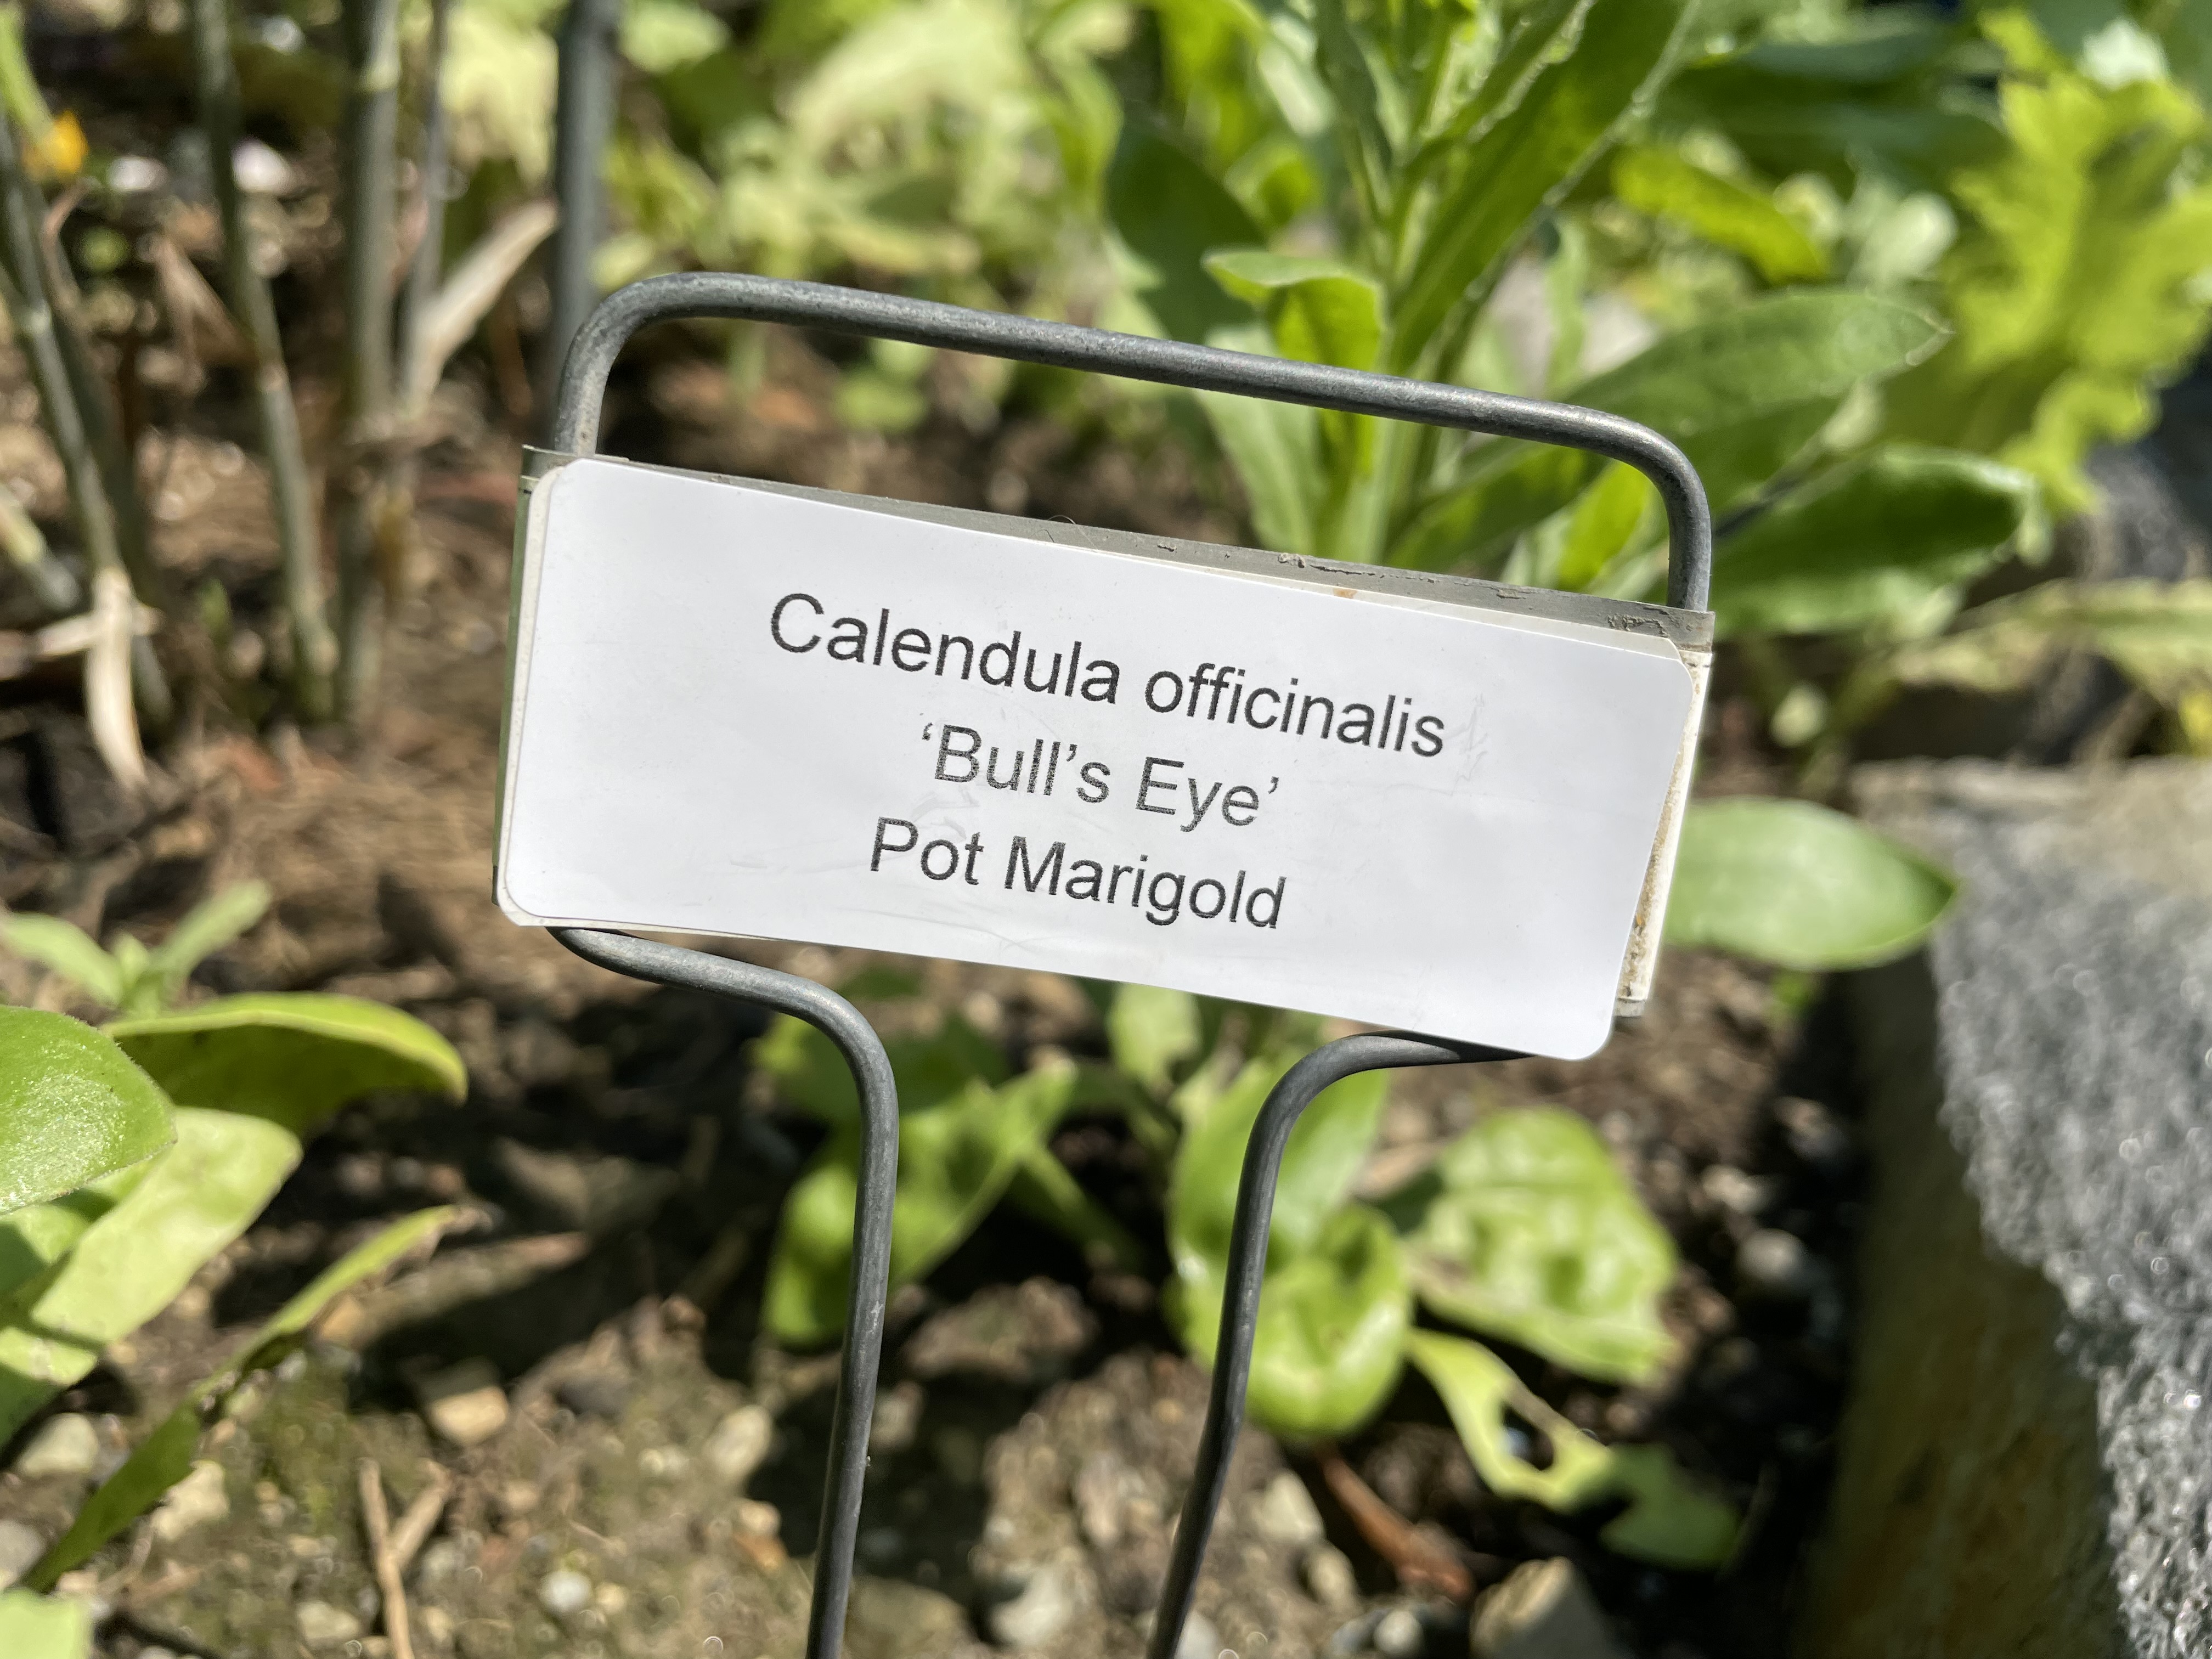 Calendula (Pot Marigold) Growing Guides, Tips, and Information